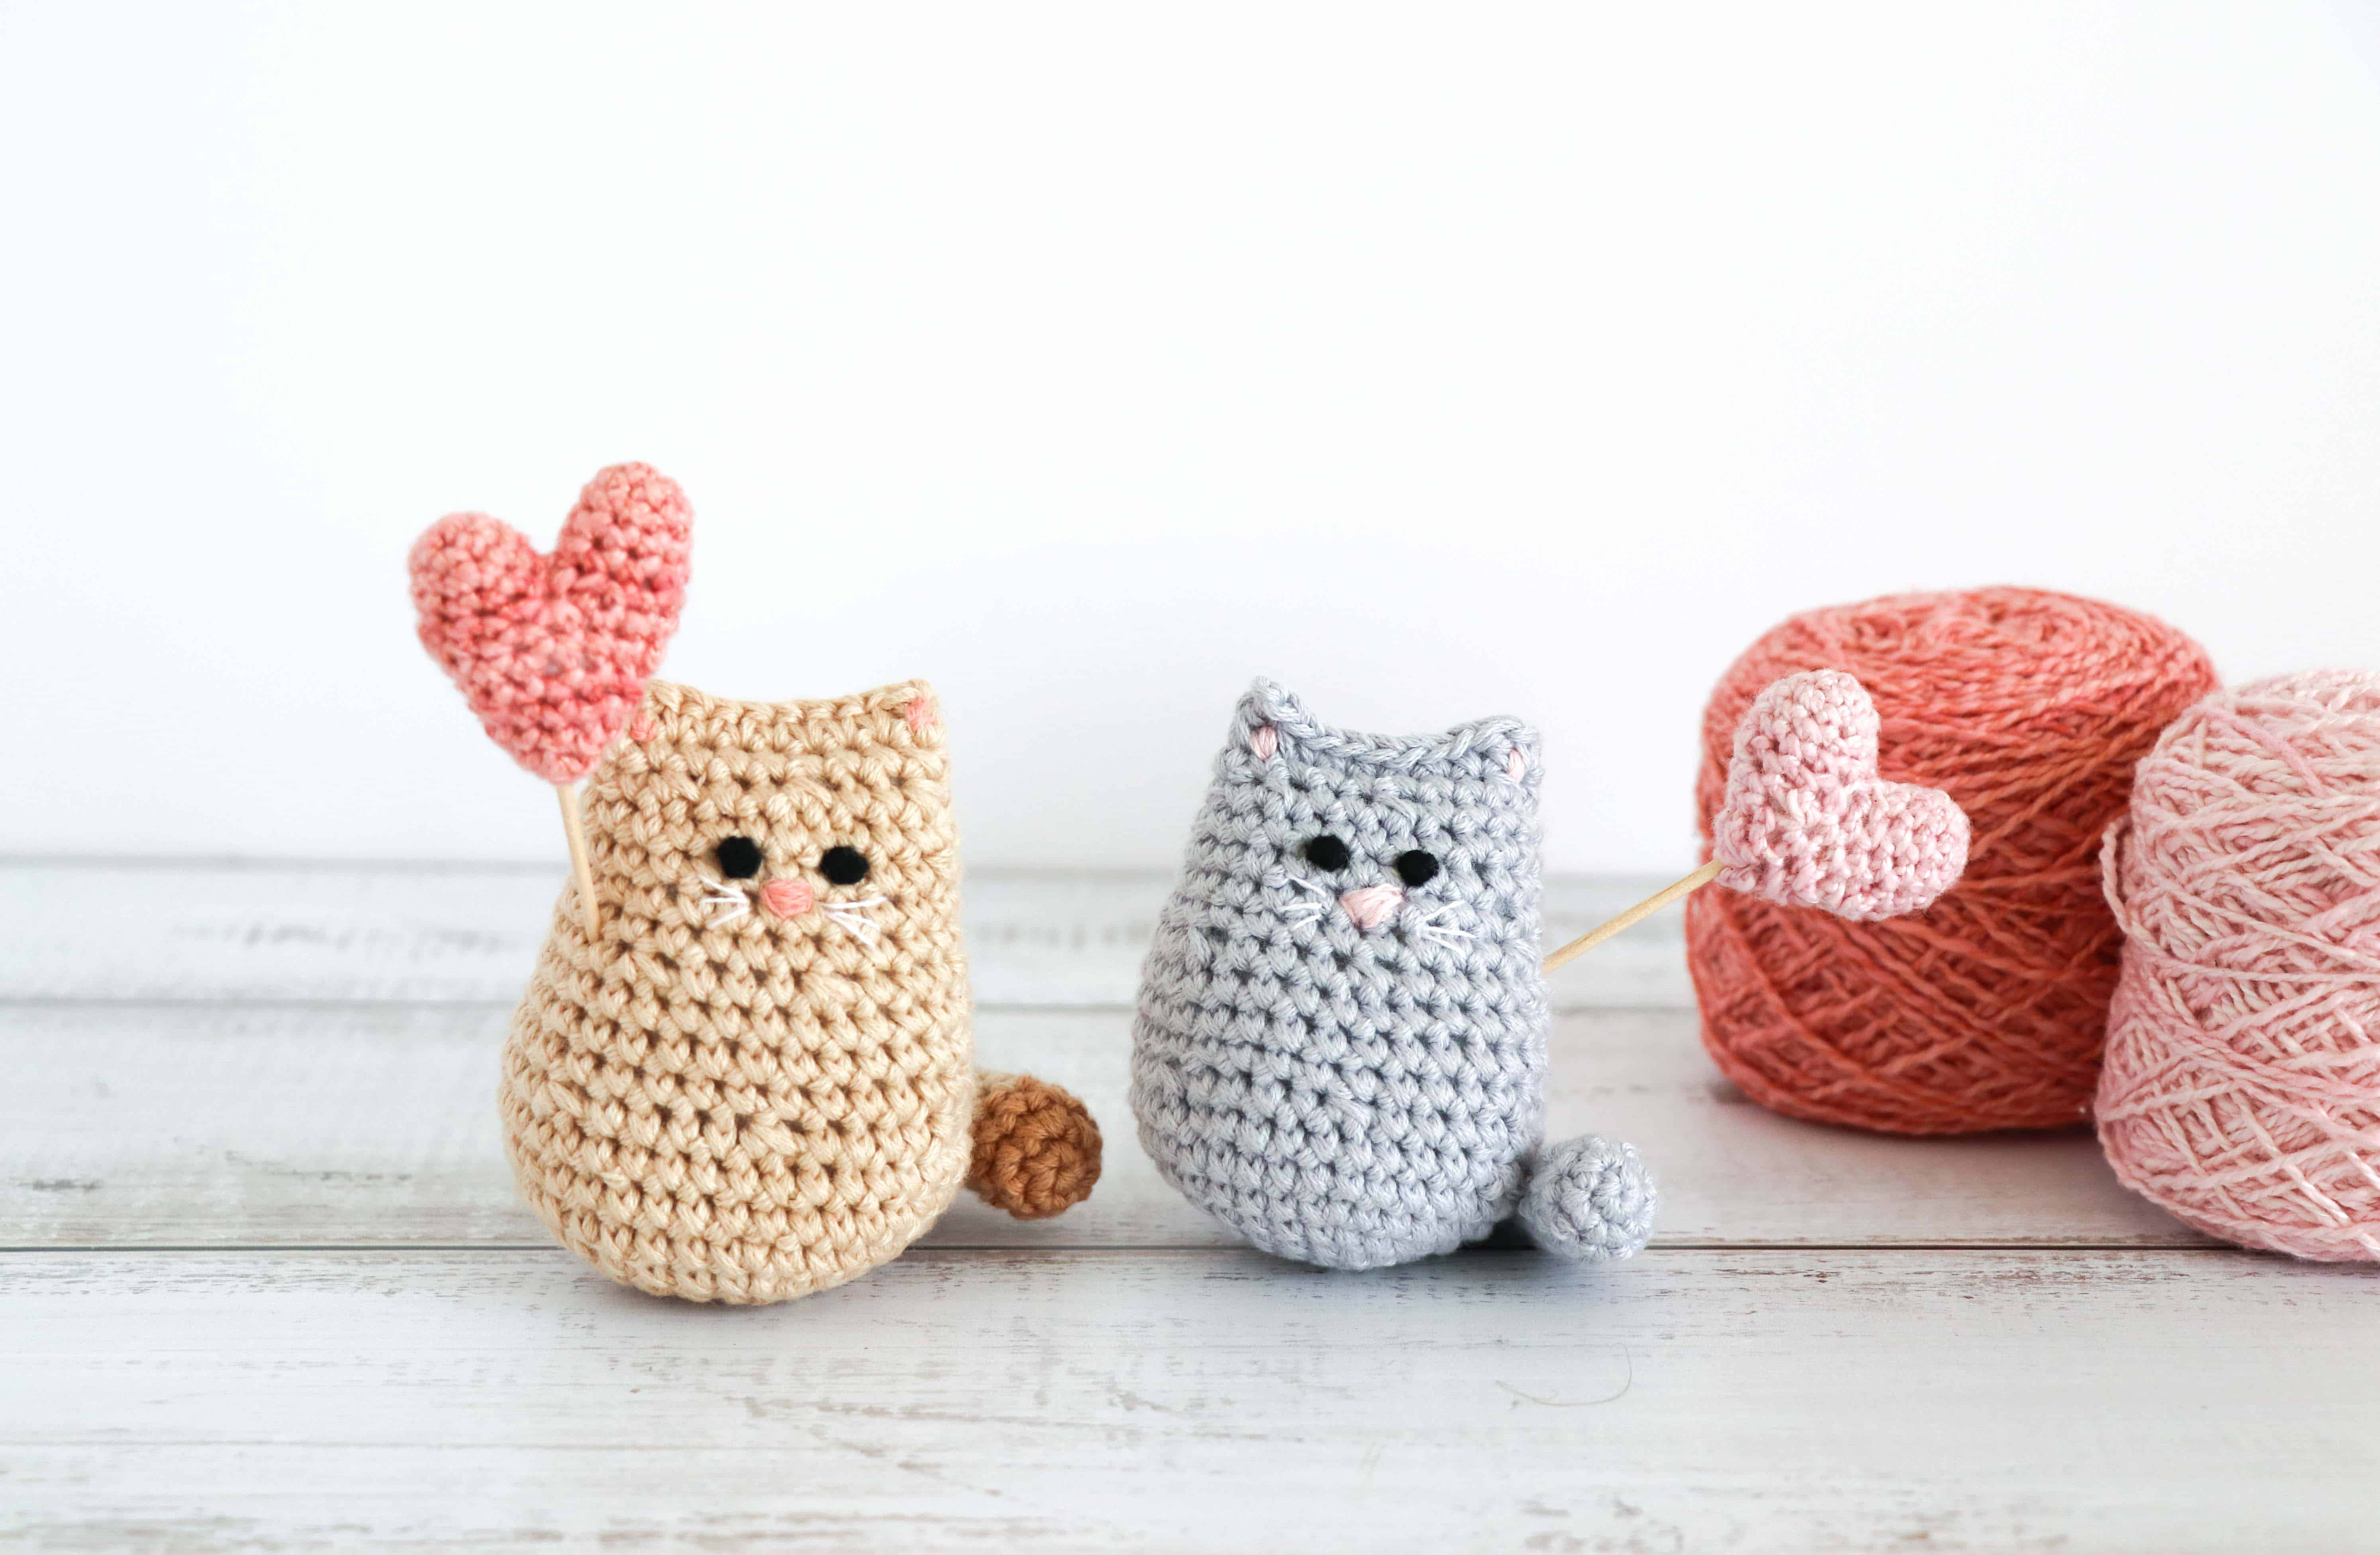 8 tips for crocheting amigurumi | how to improve your amigurumi